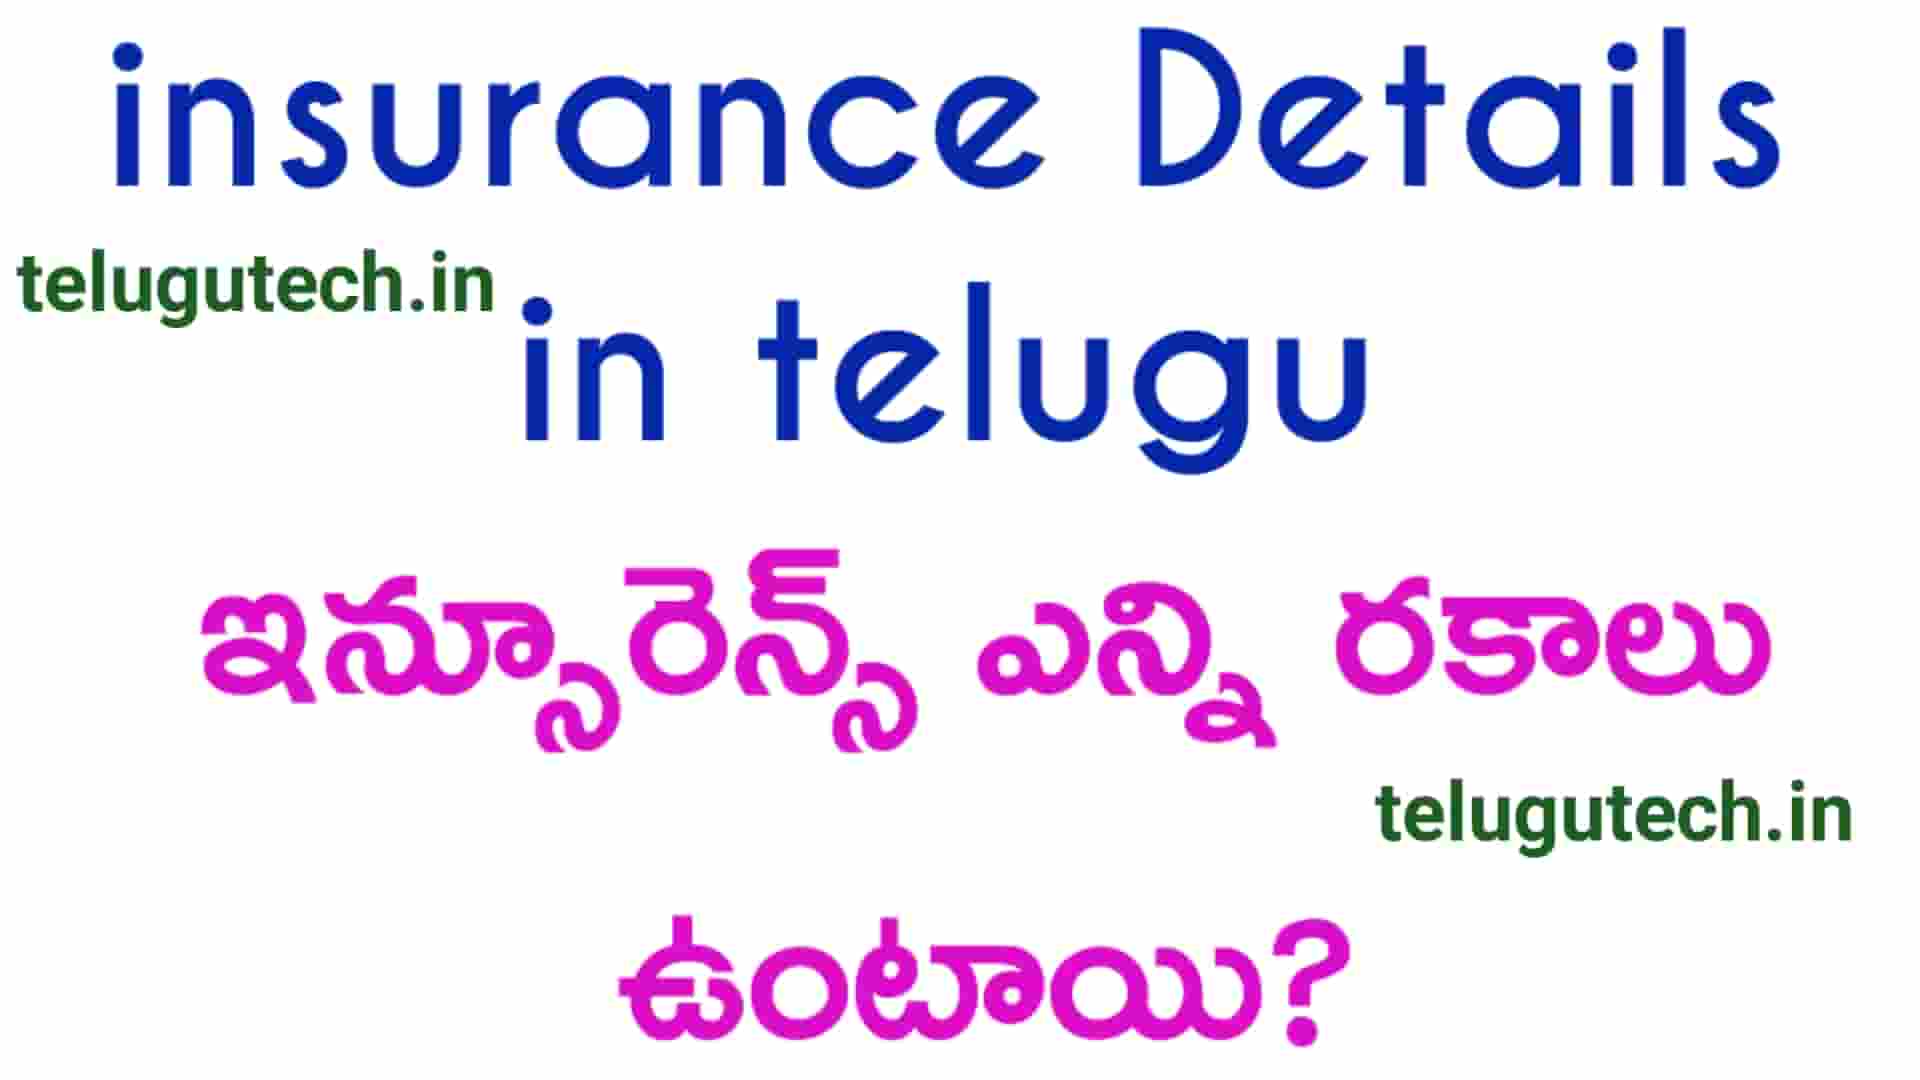 Insurance Details in Telugu